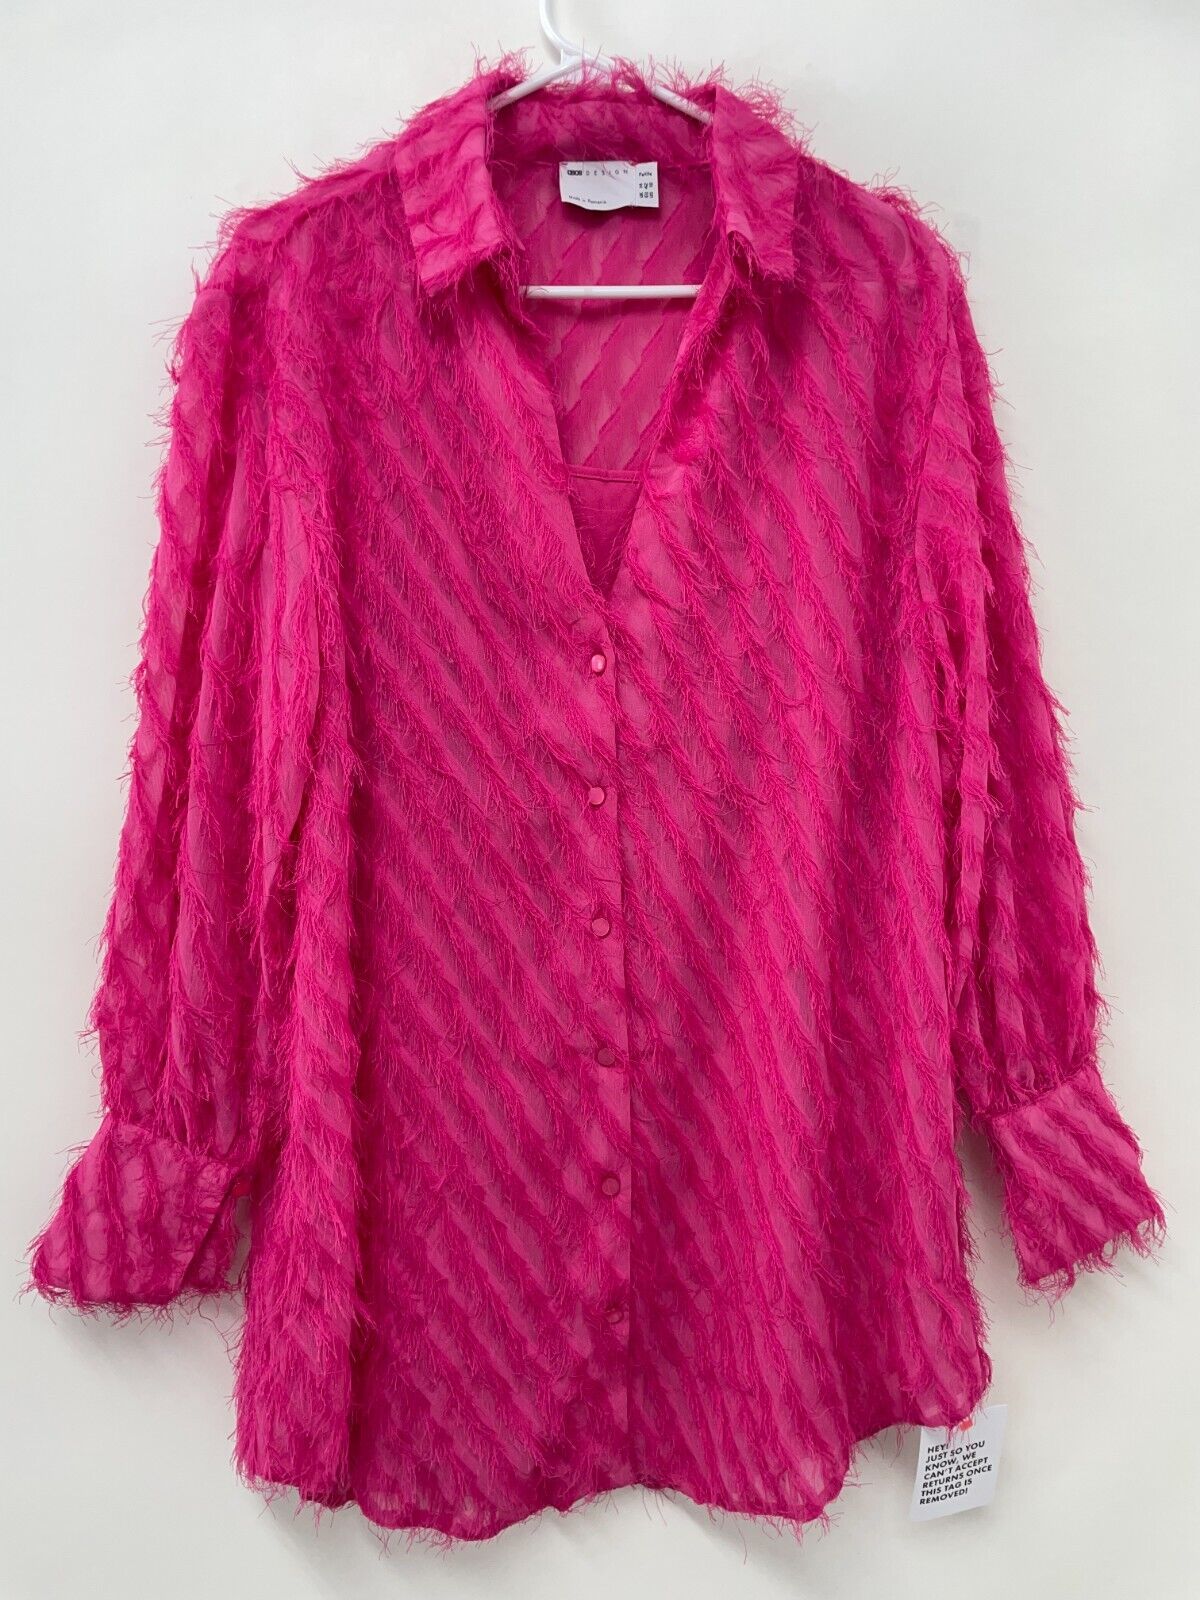 Asos Women 10 Petite Slouchy Shirt Mini Dress Fluffy Textured Fabric Bright Pink